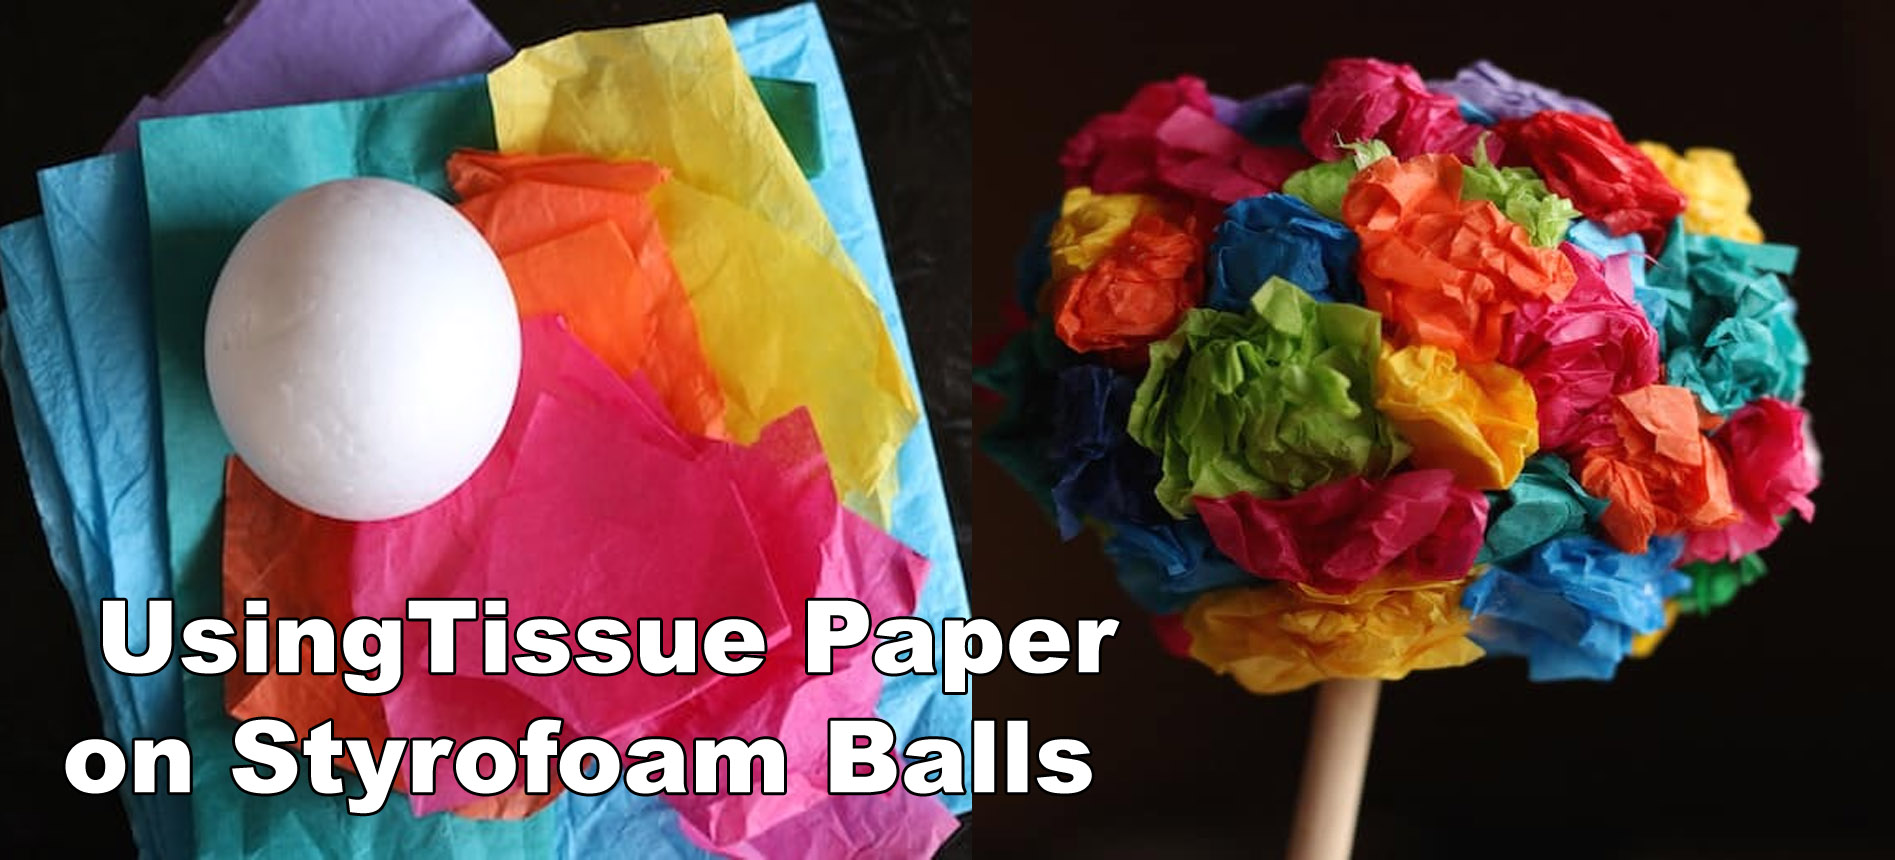 Using tissue paper on Styrofoam Balls